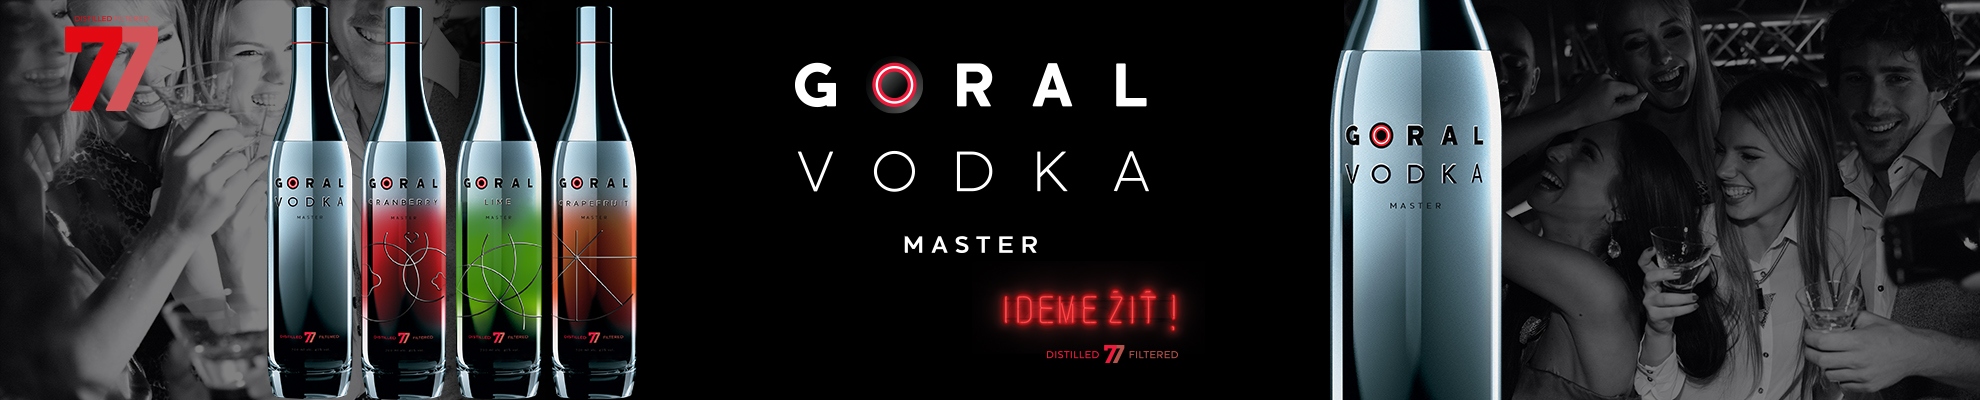 goral vodka master